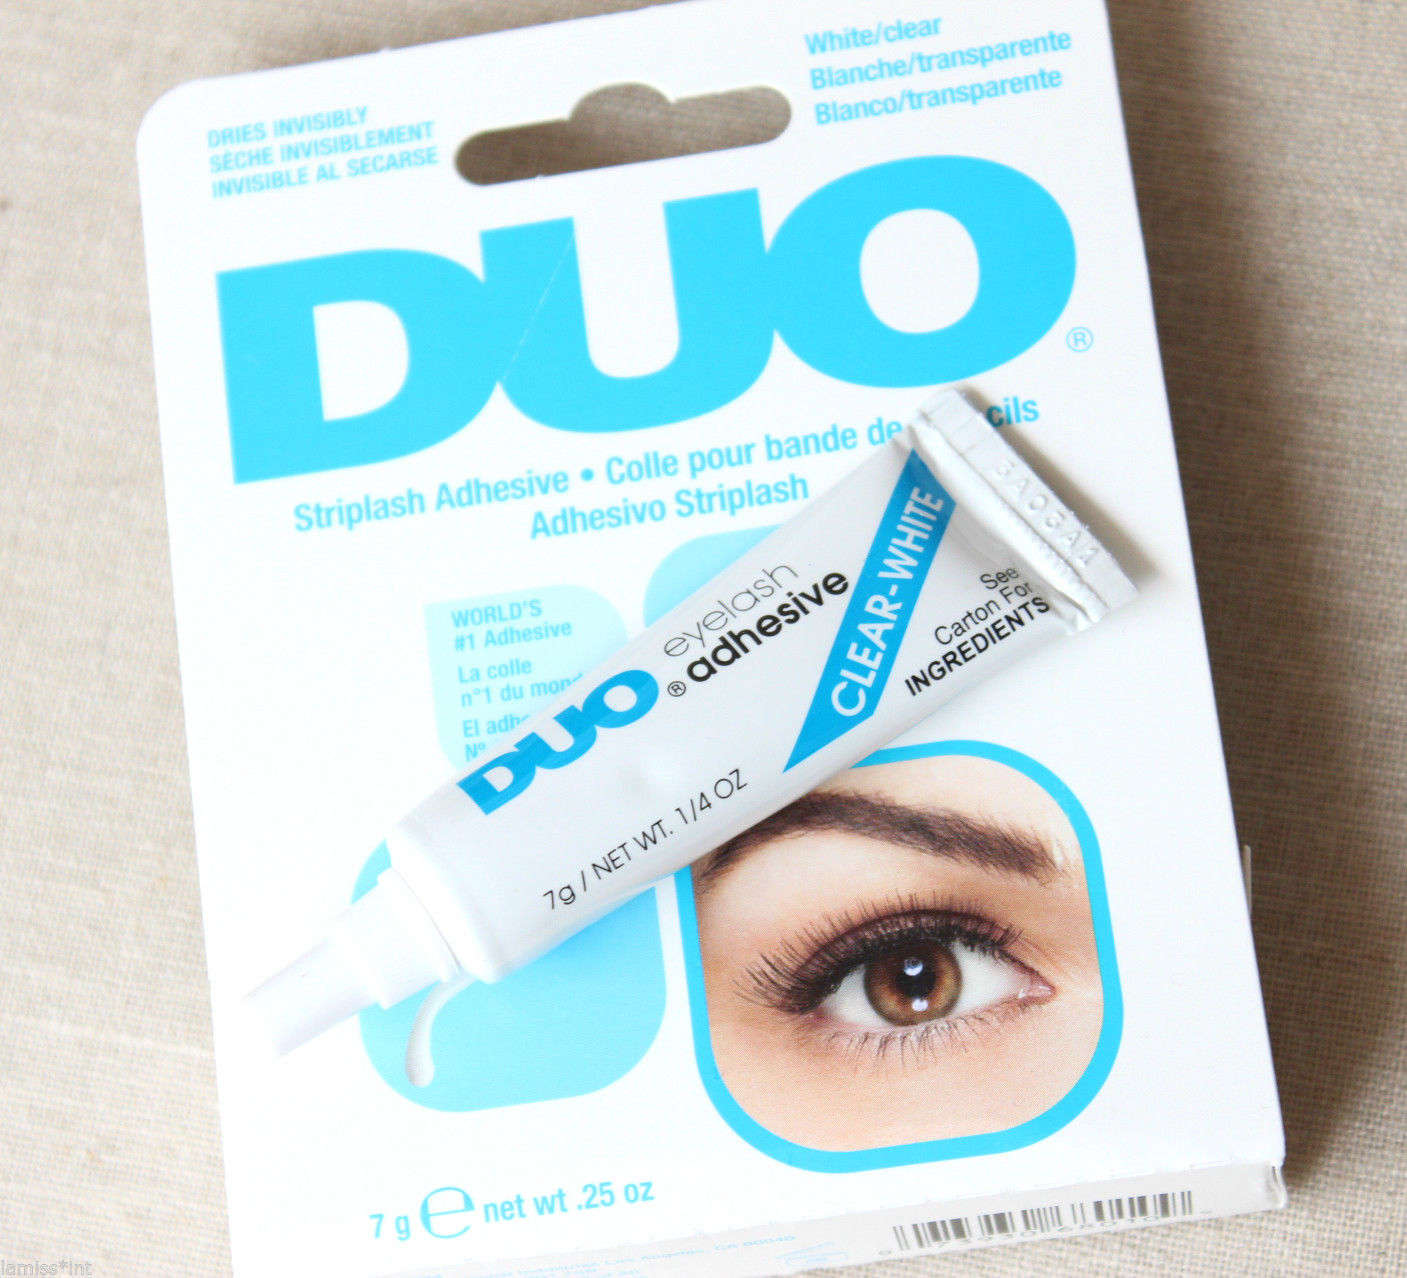 DUO eyelash adhesive MAC Wimpernkleber transparent/klar weiss, strip lash glue